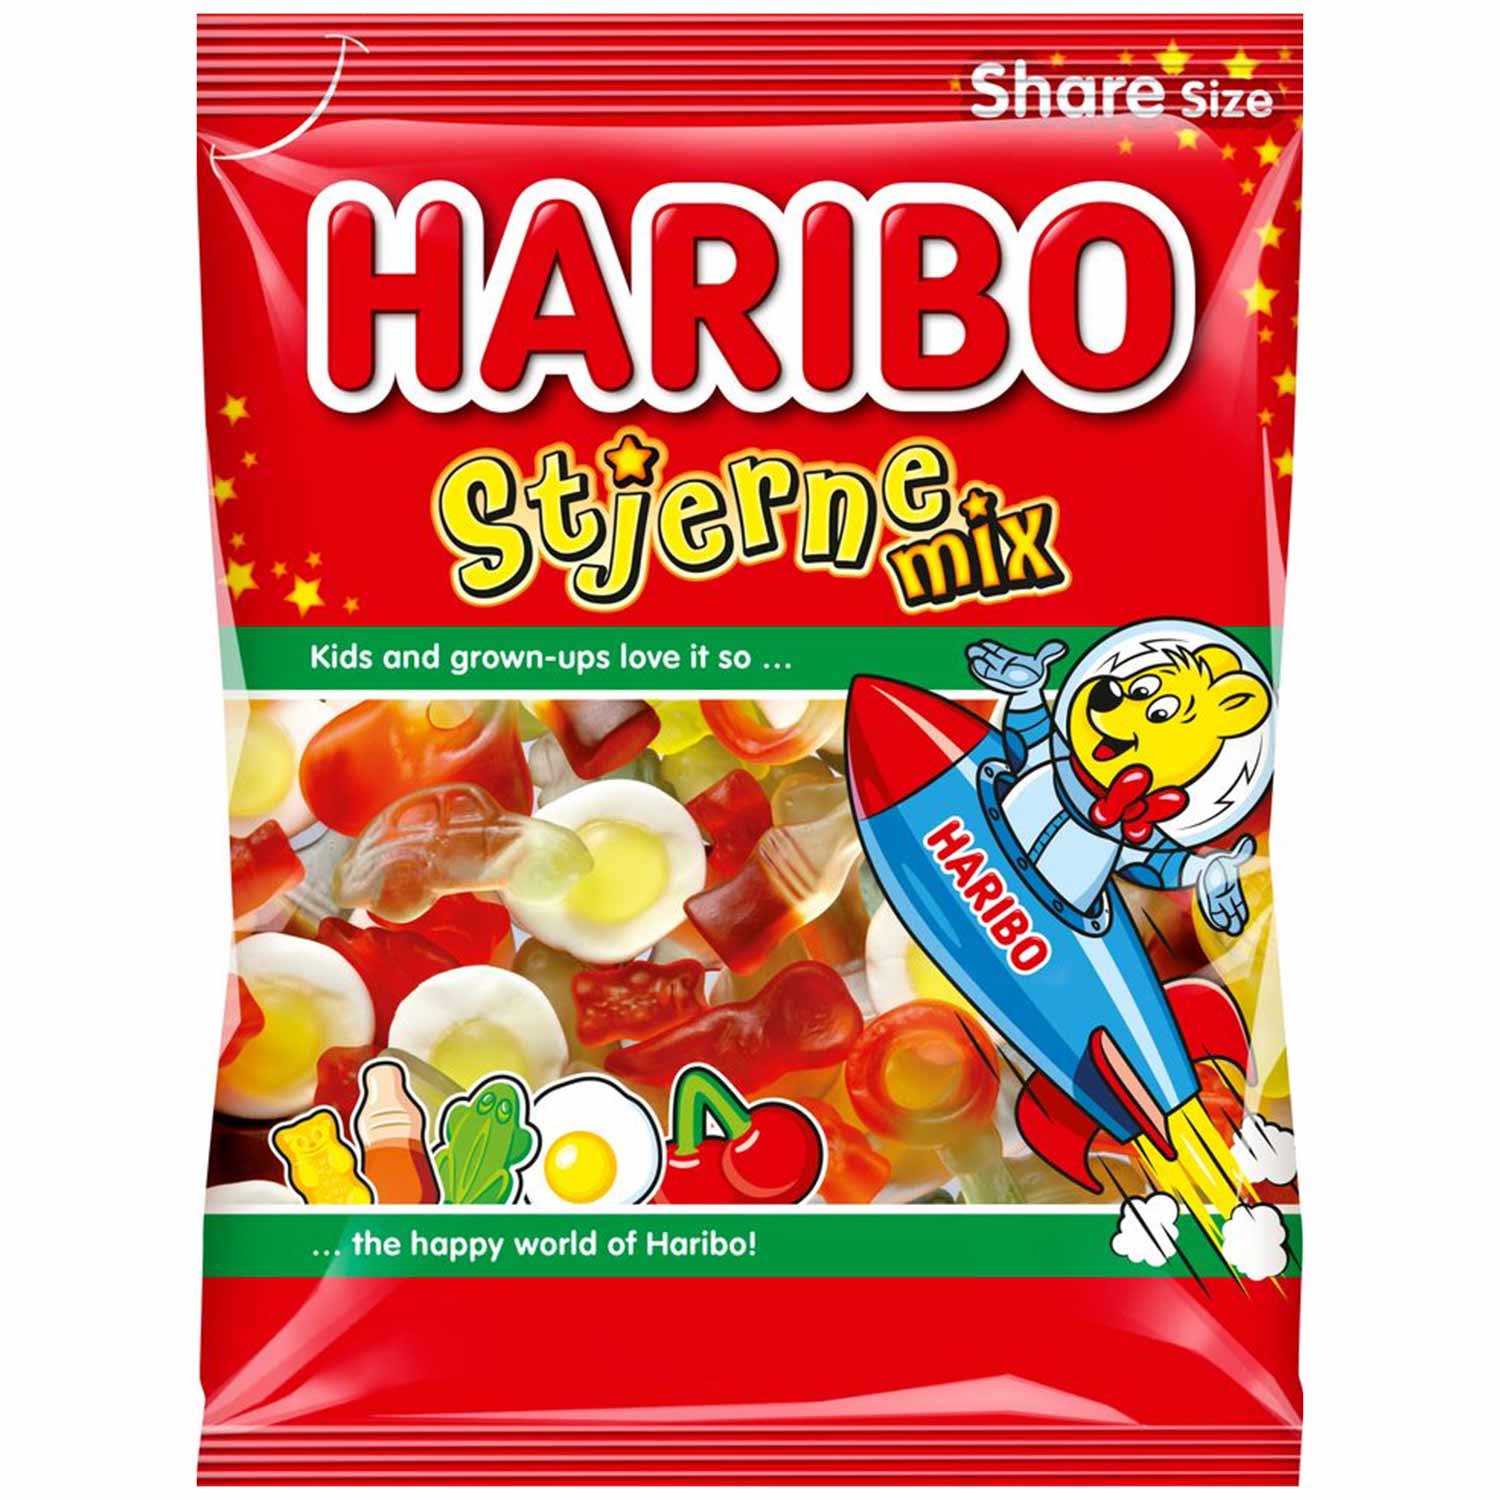 Haribo Stjerne Mix 375g - Candyshop.ch